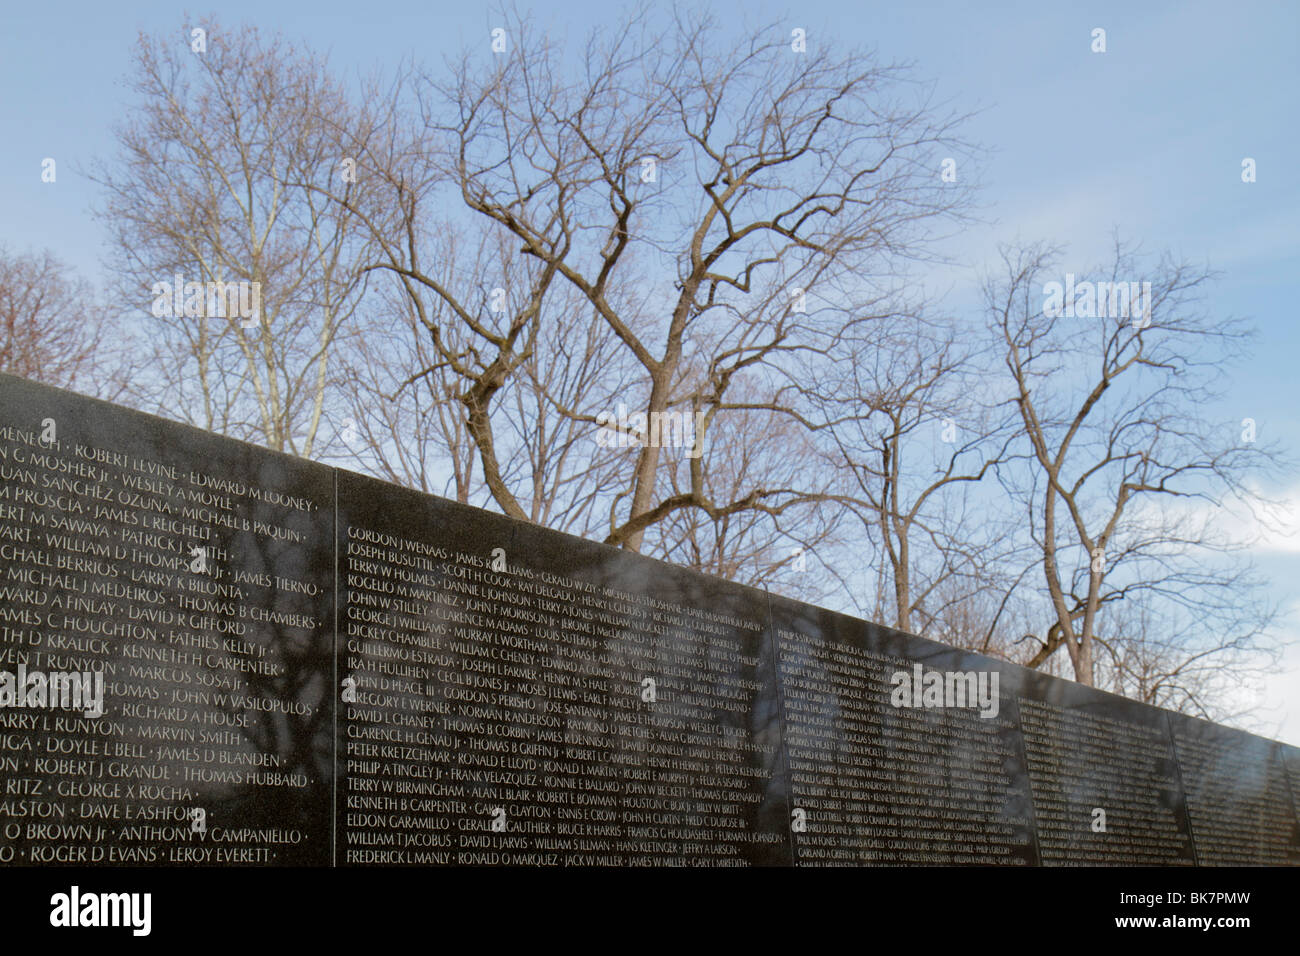 Washington DC, National Mall & Memorial Parks, Vietnam Veterans Memorial Wall, Vietnam War, monumento, architetto Maya Lin. Ucciso soldato, nomi, eroe, albero, wi Foto Stock